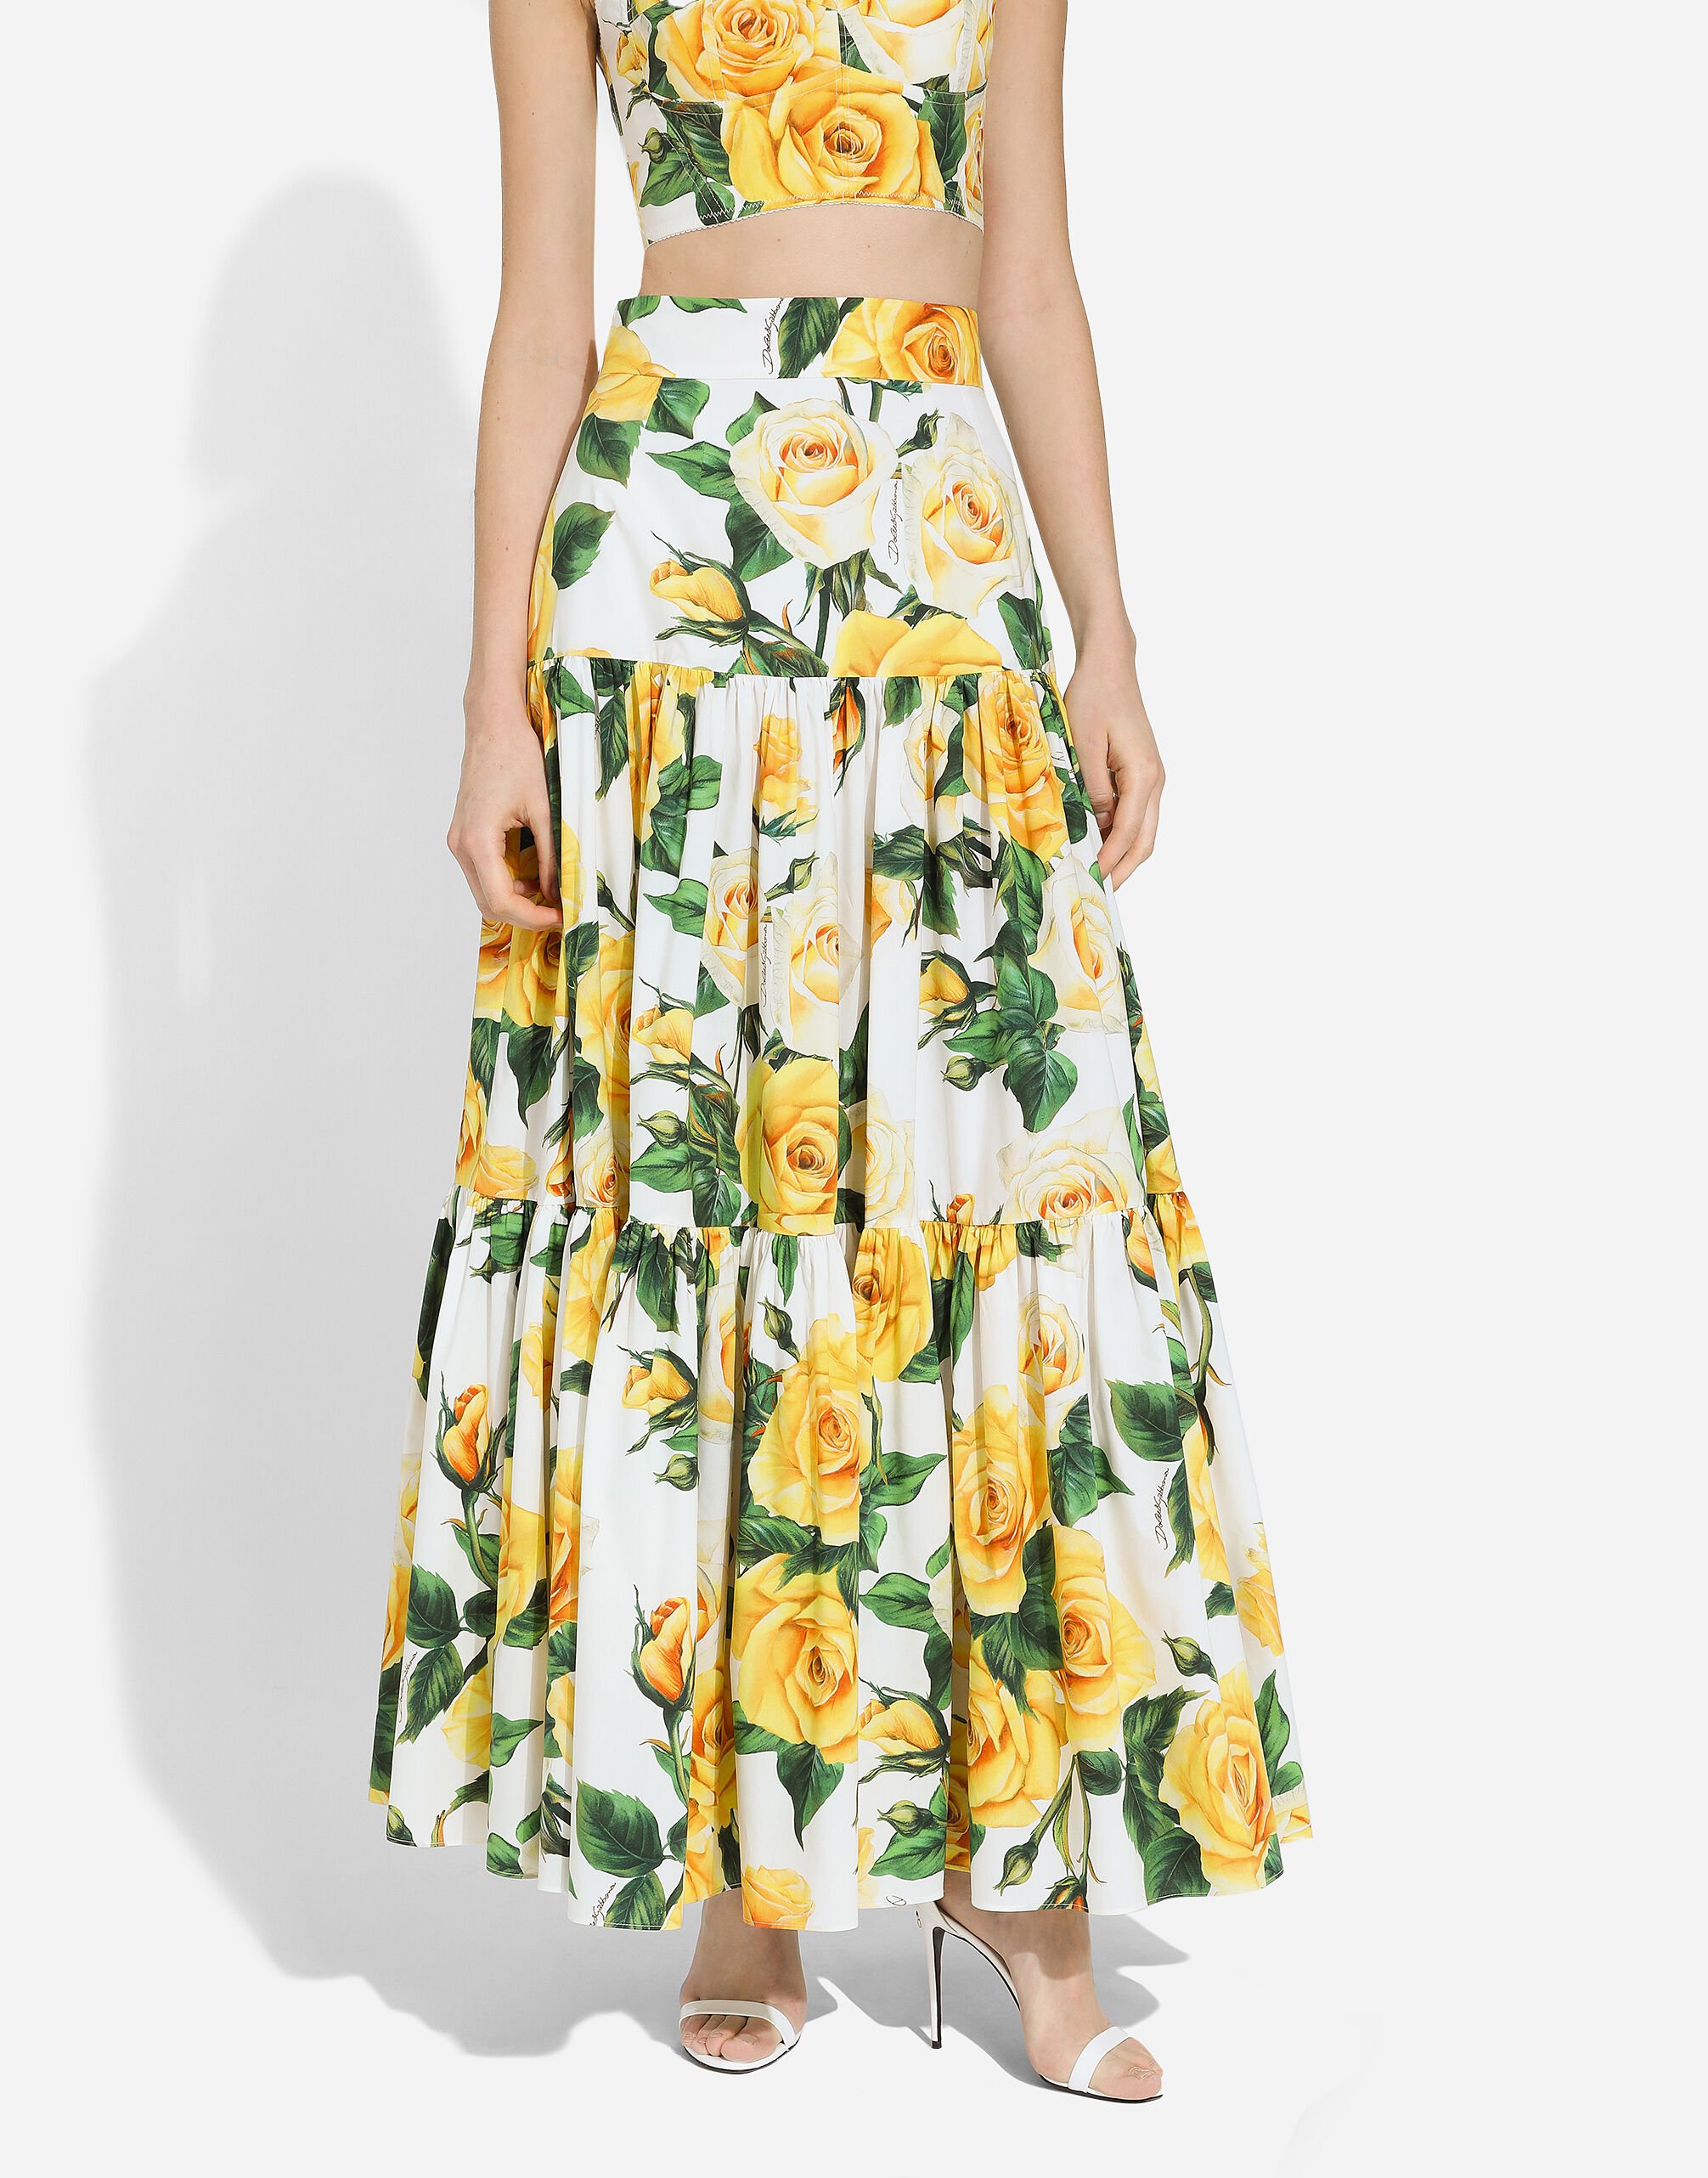 Long ruffled skirt in yellow rose-print cotton